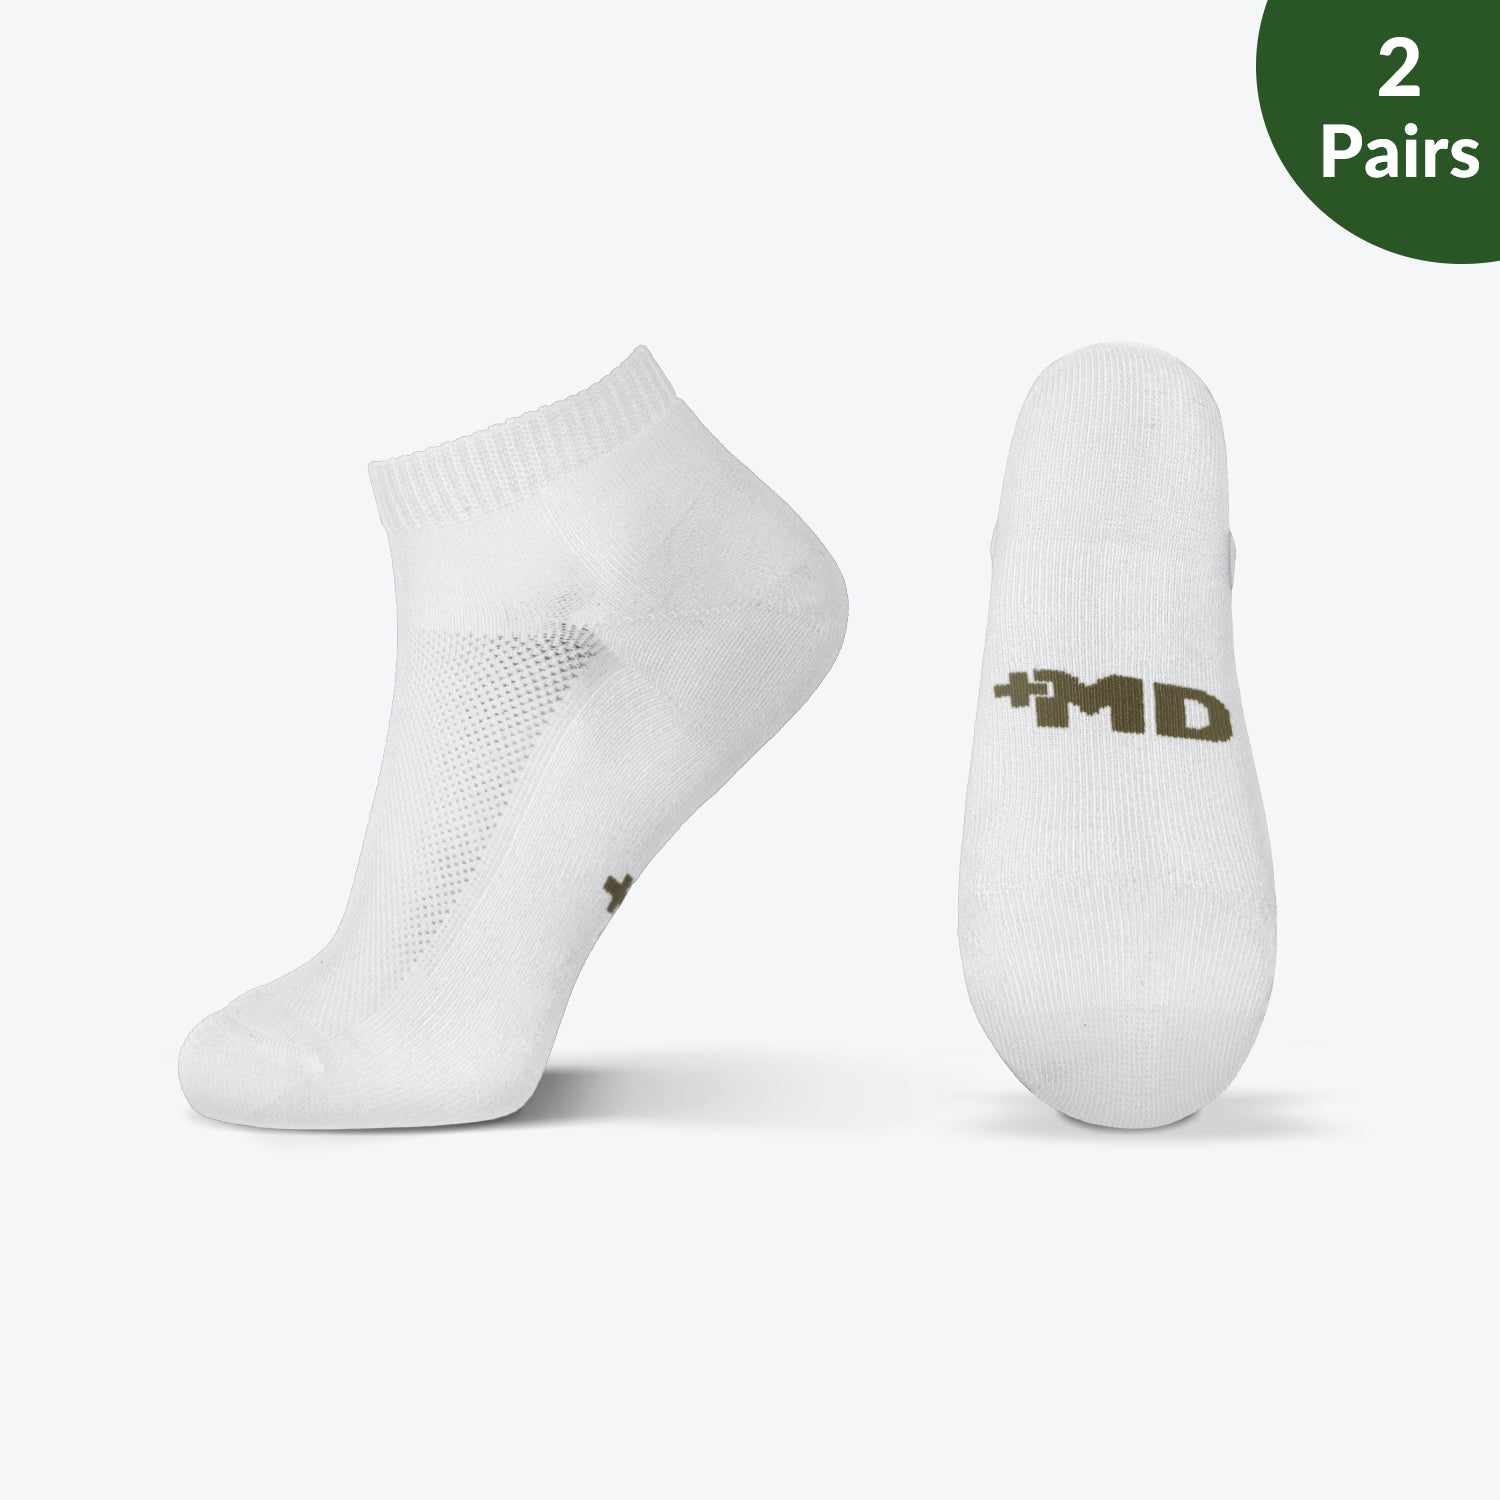 Unisex Plain Mens Ankle Length Socks ( Pack Of 7 Pairs, Non Terry )